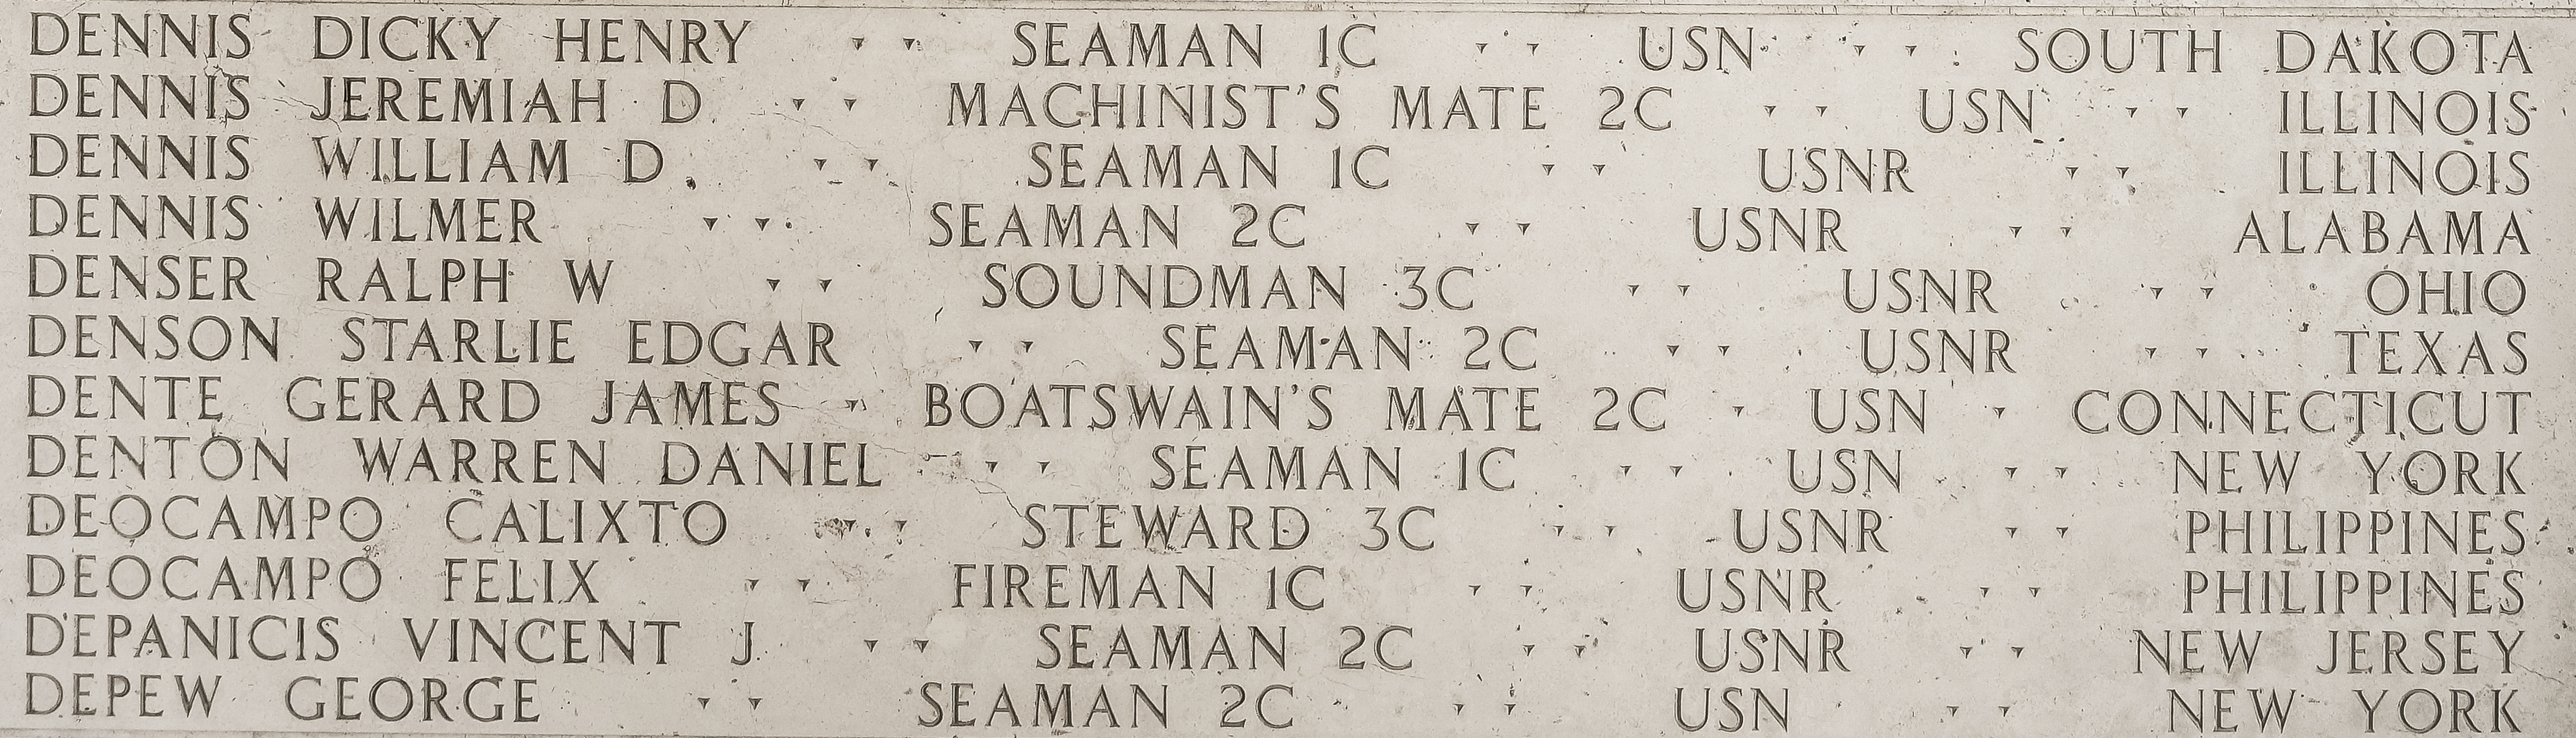 George  Depew, Seaman Second Class